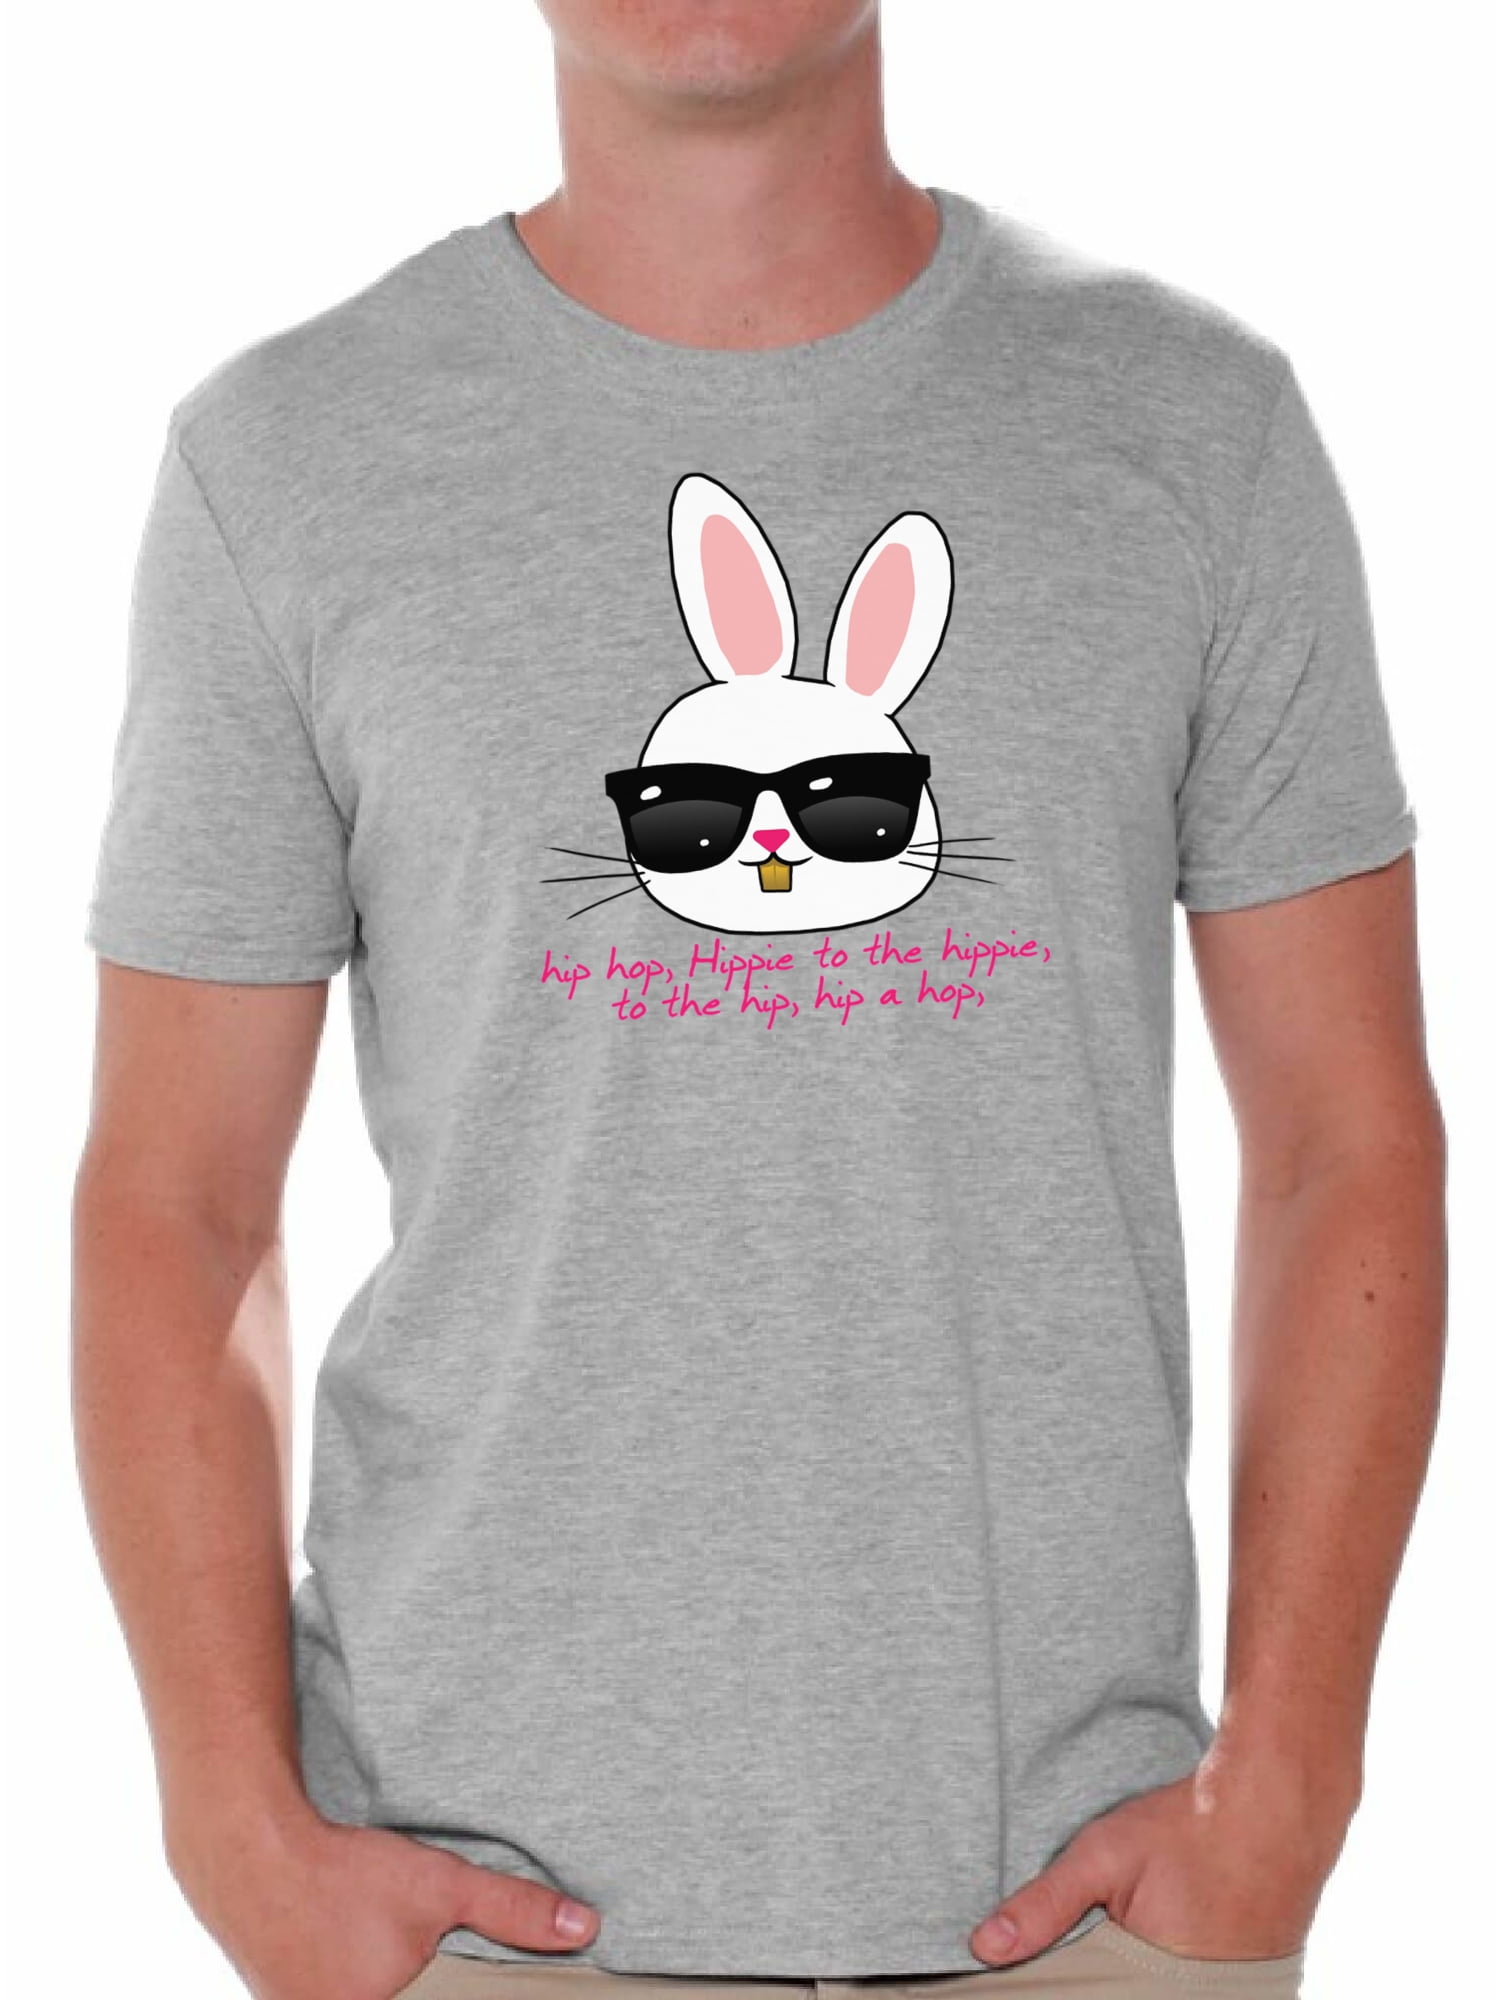 14-16 Boys Dabbit Rabbit Blue Short Sleeve Graphic T-Shirt 4-5 10-12 6-7 8 